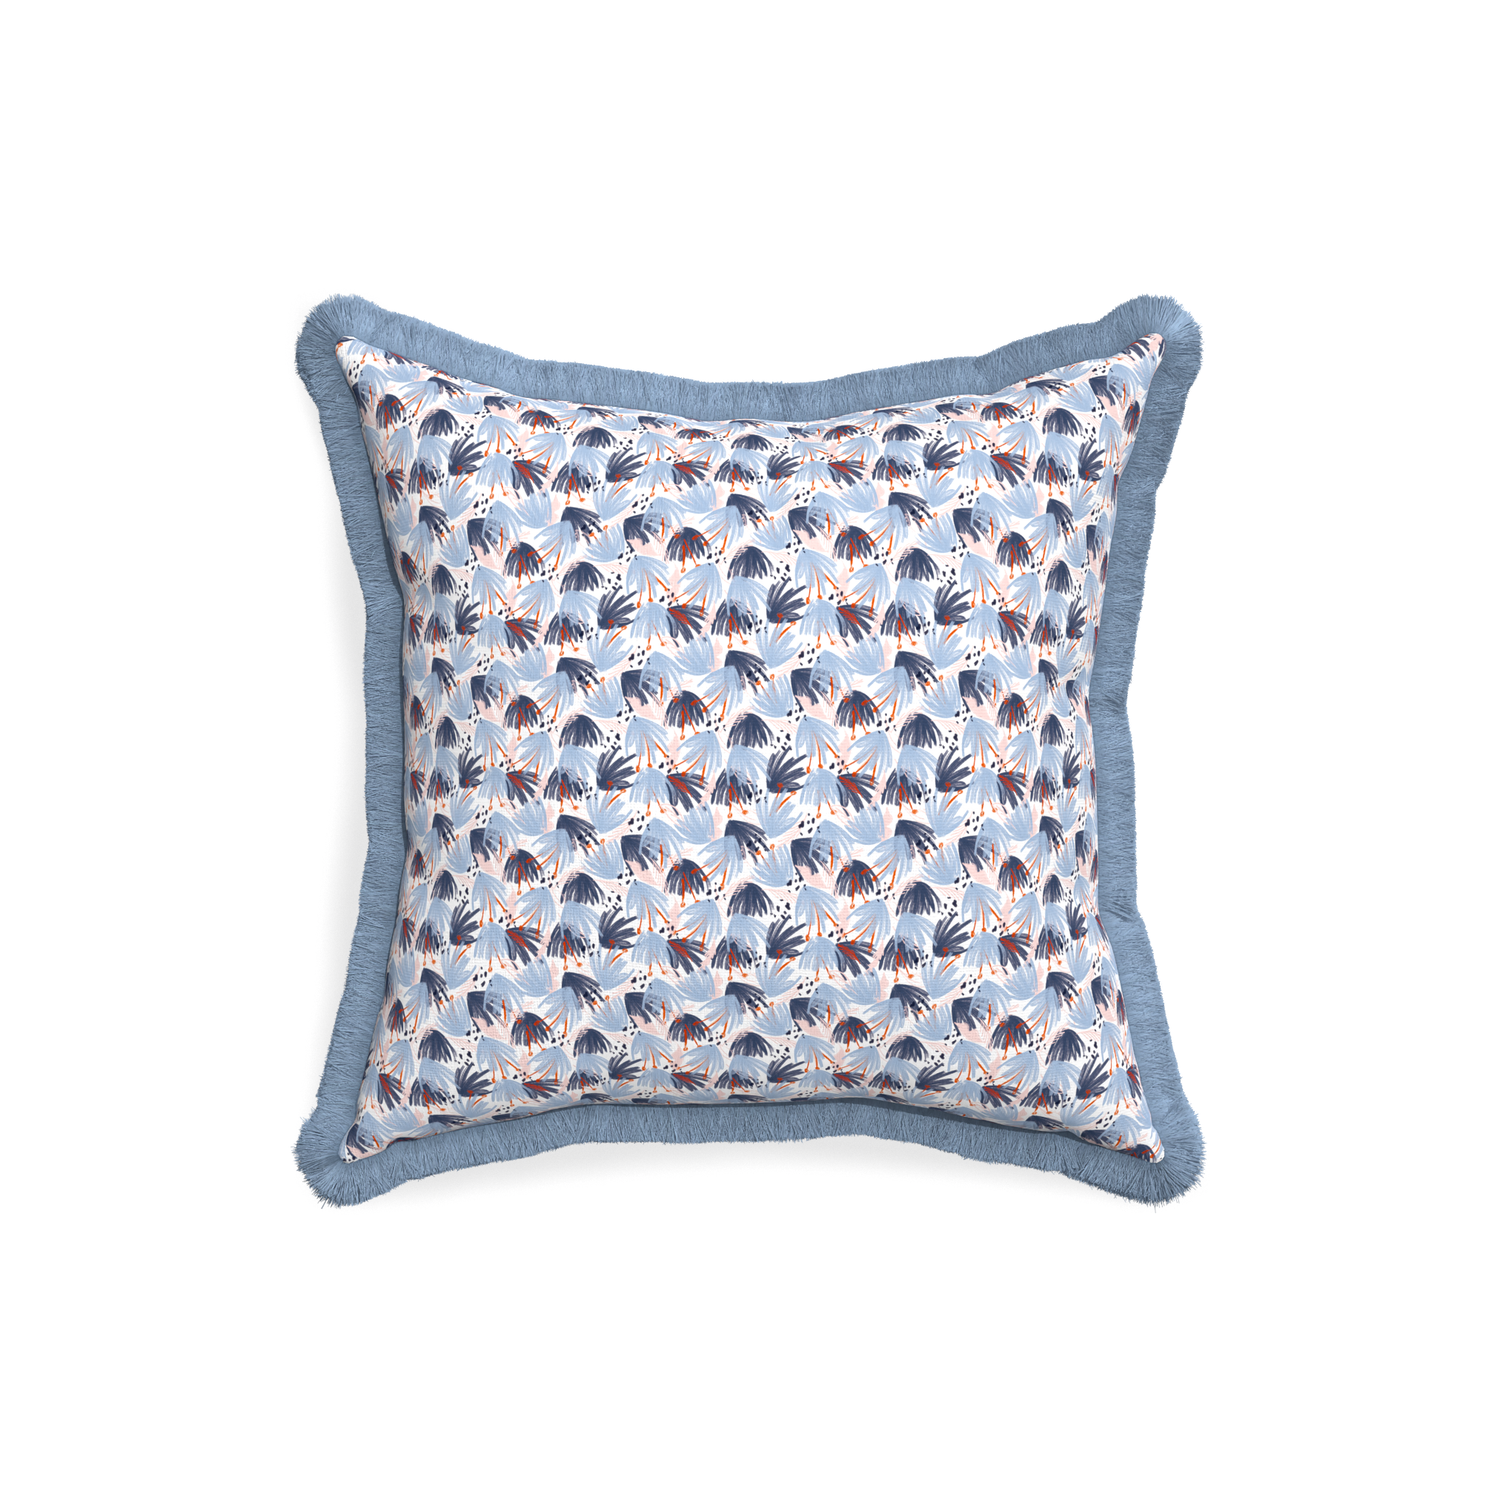 18-square eden blue custom pillow with sky fringe on white background